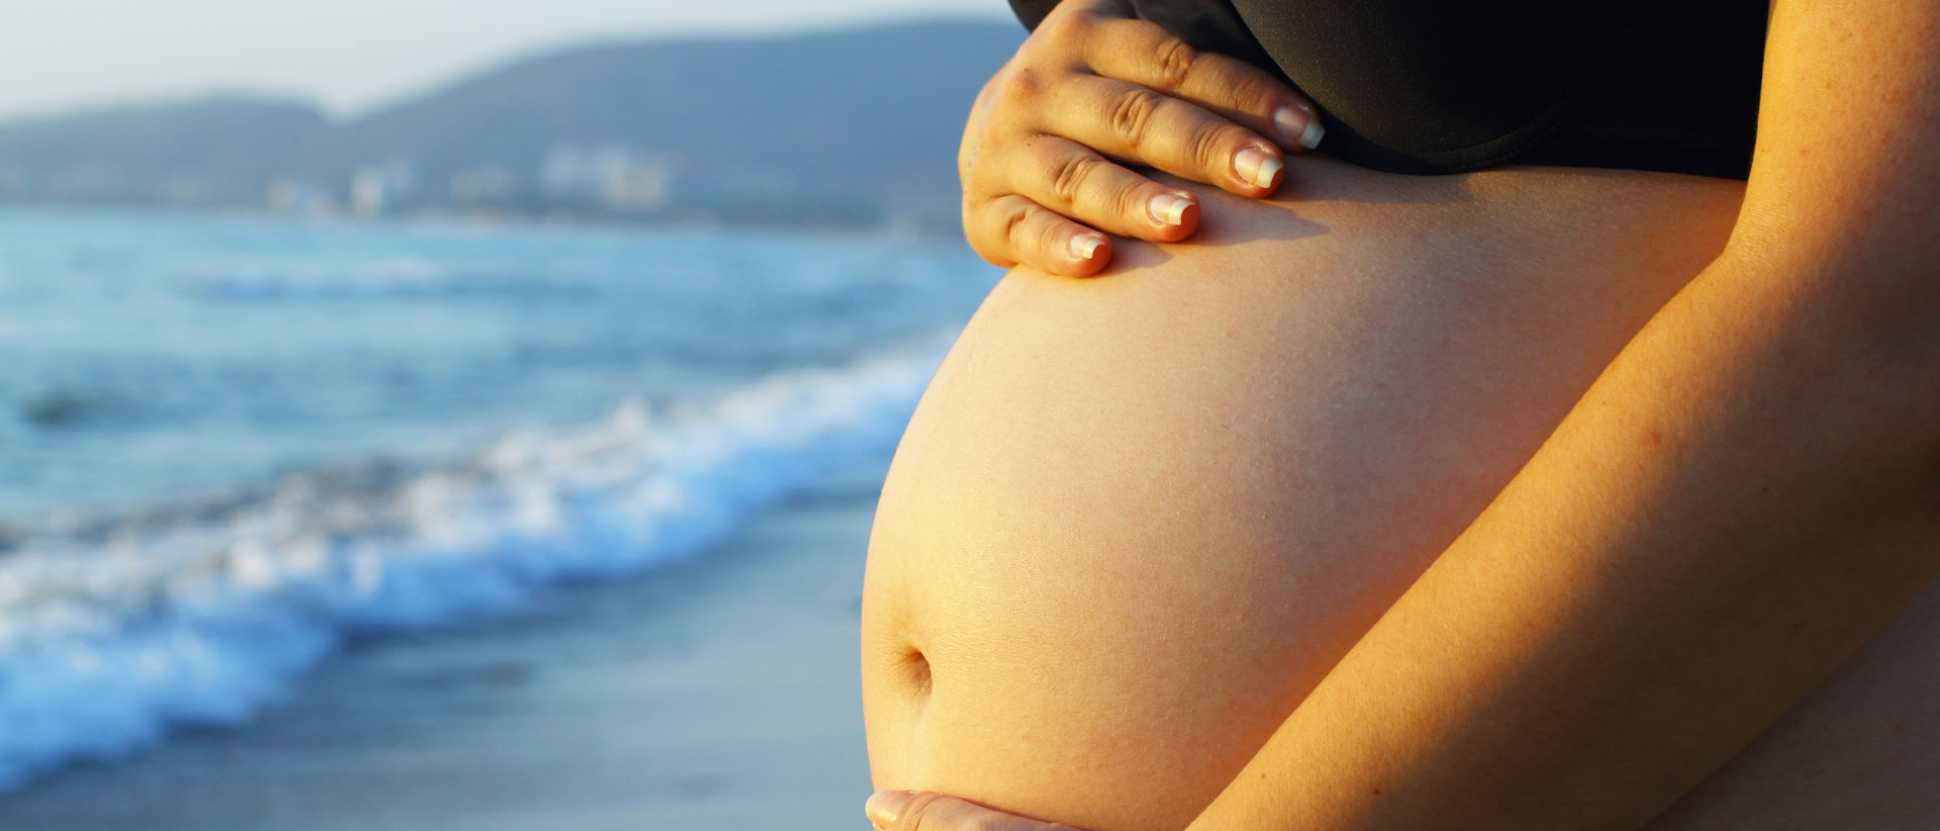 160331-Vitamin-D-deficiency-during-pregnancy-may-increase-risk-of-MS-in-childrenjpg